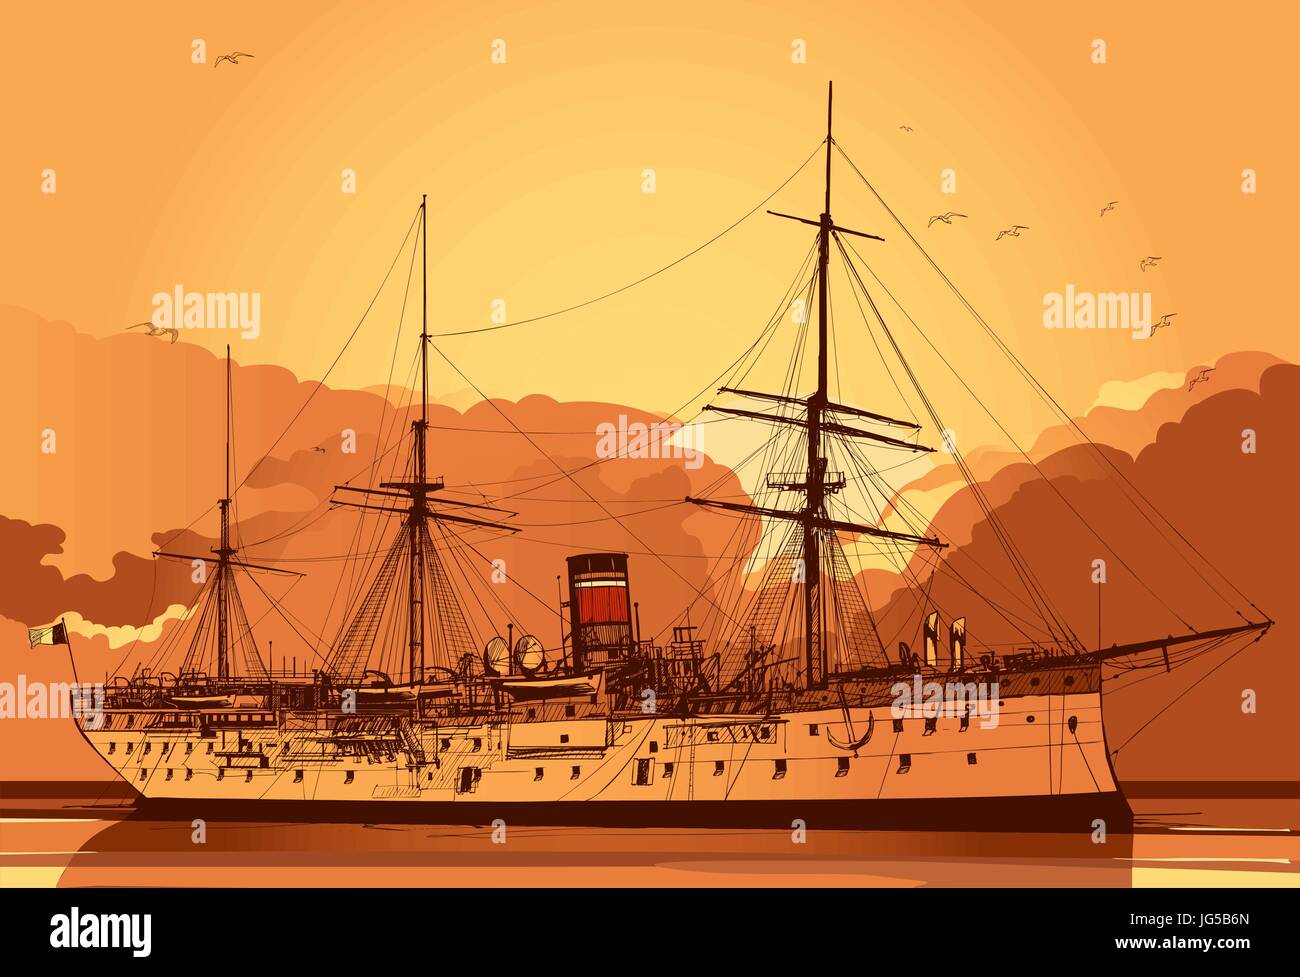 Vector illustration of an old battle ship Stock Vector